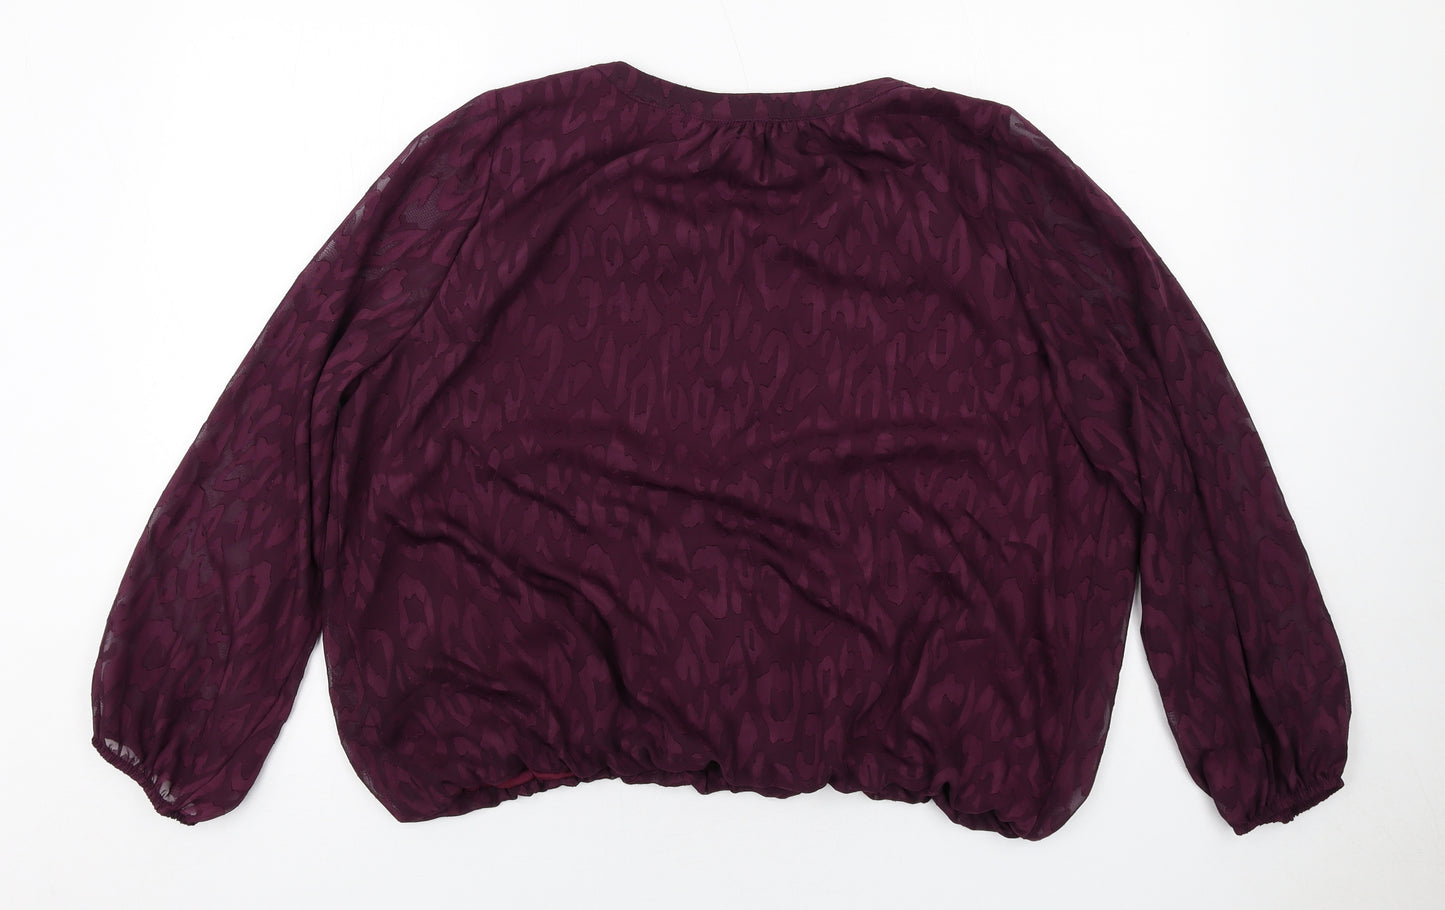 Bonmarché Womens Purple Animal Print Polyester Basic Blouse Size 20 V-Neck - Leopard Print